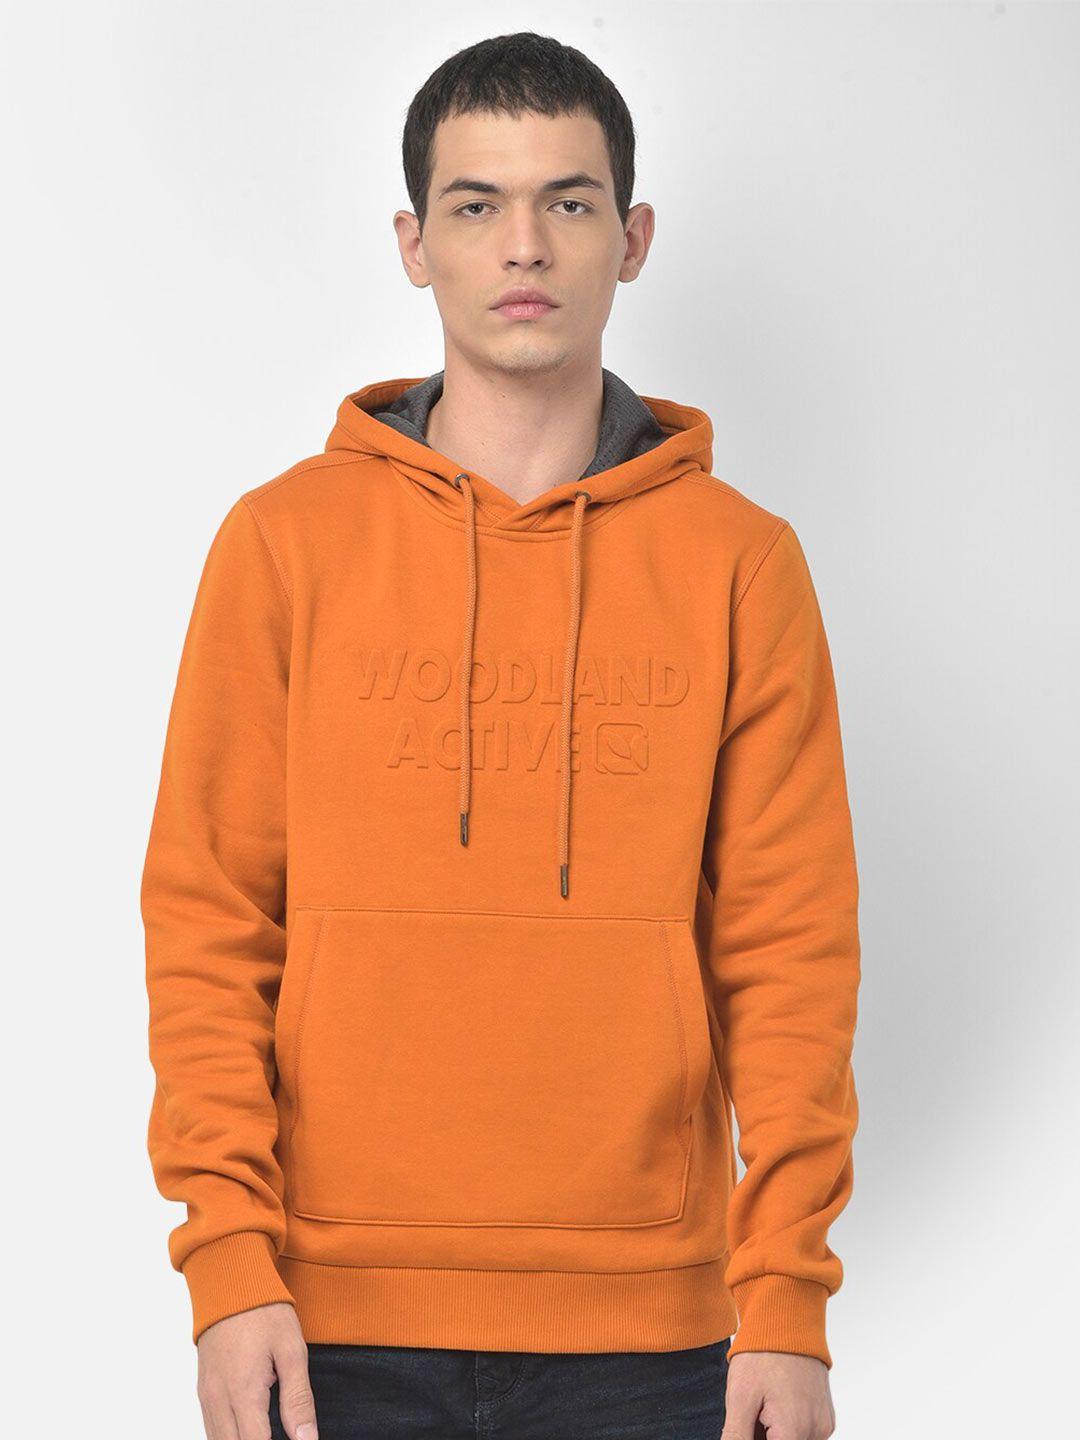 woodland men orange brand logo sweatshirt